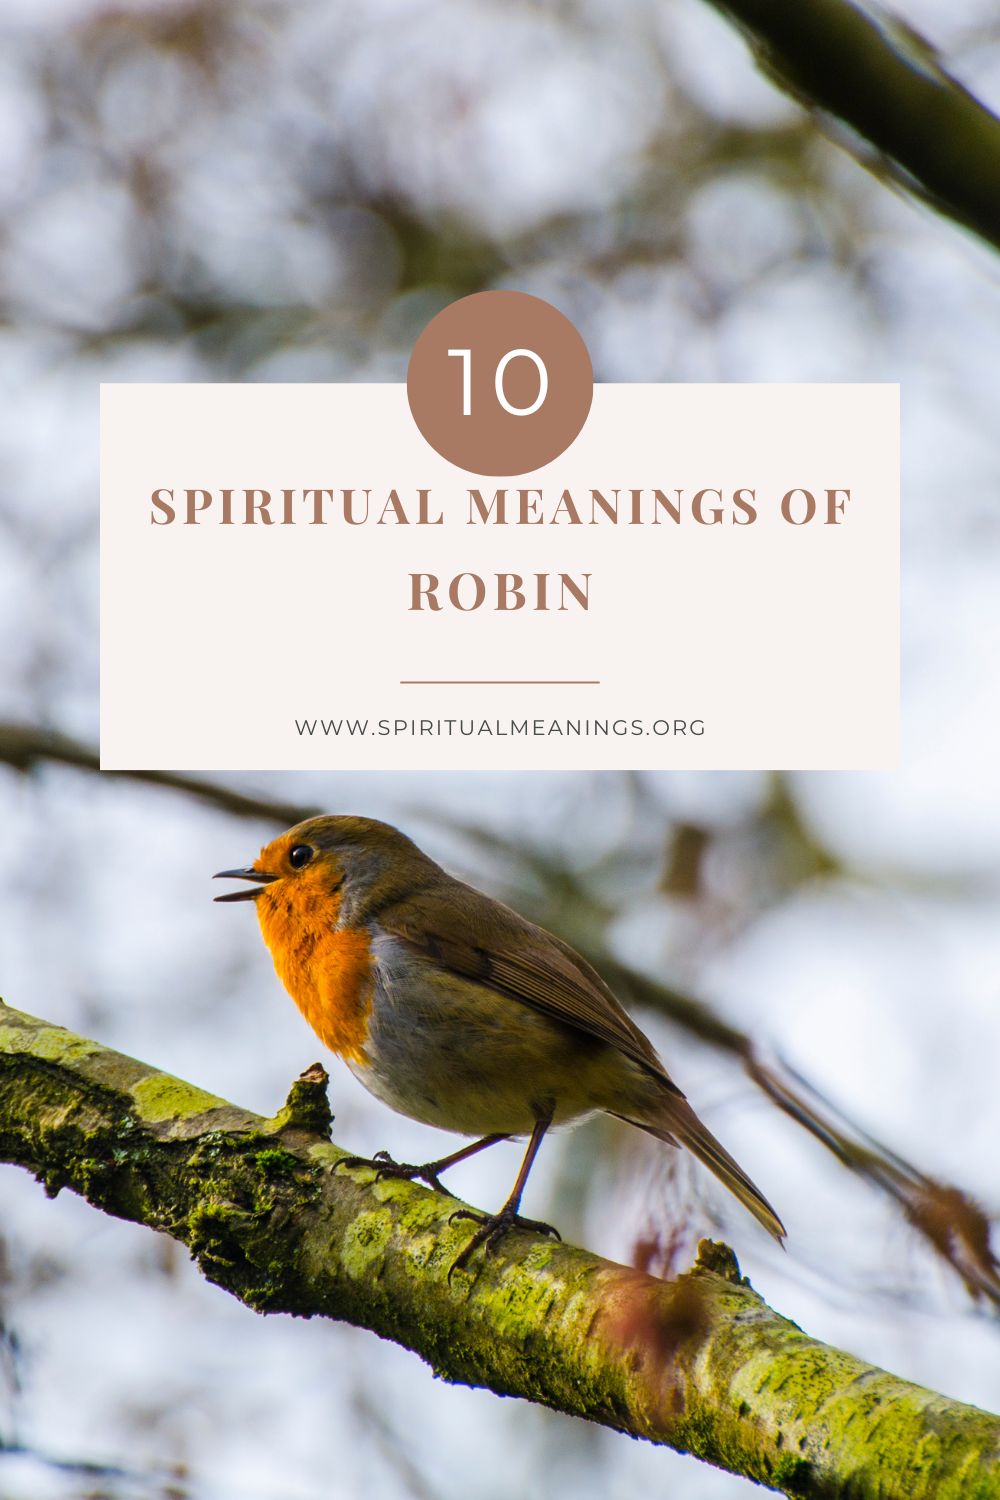 Robin Symbolism